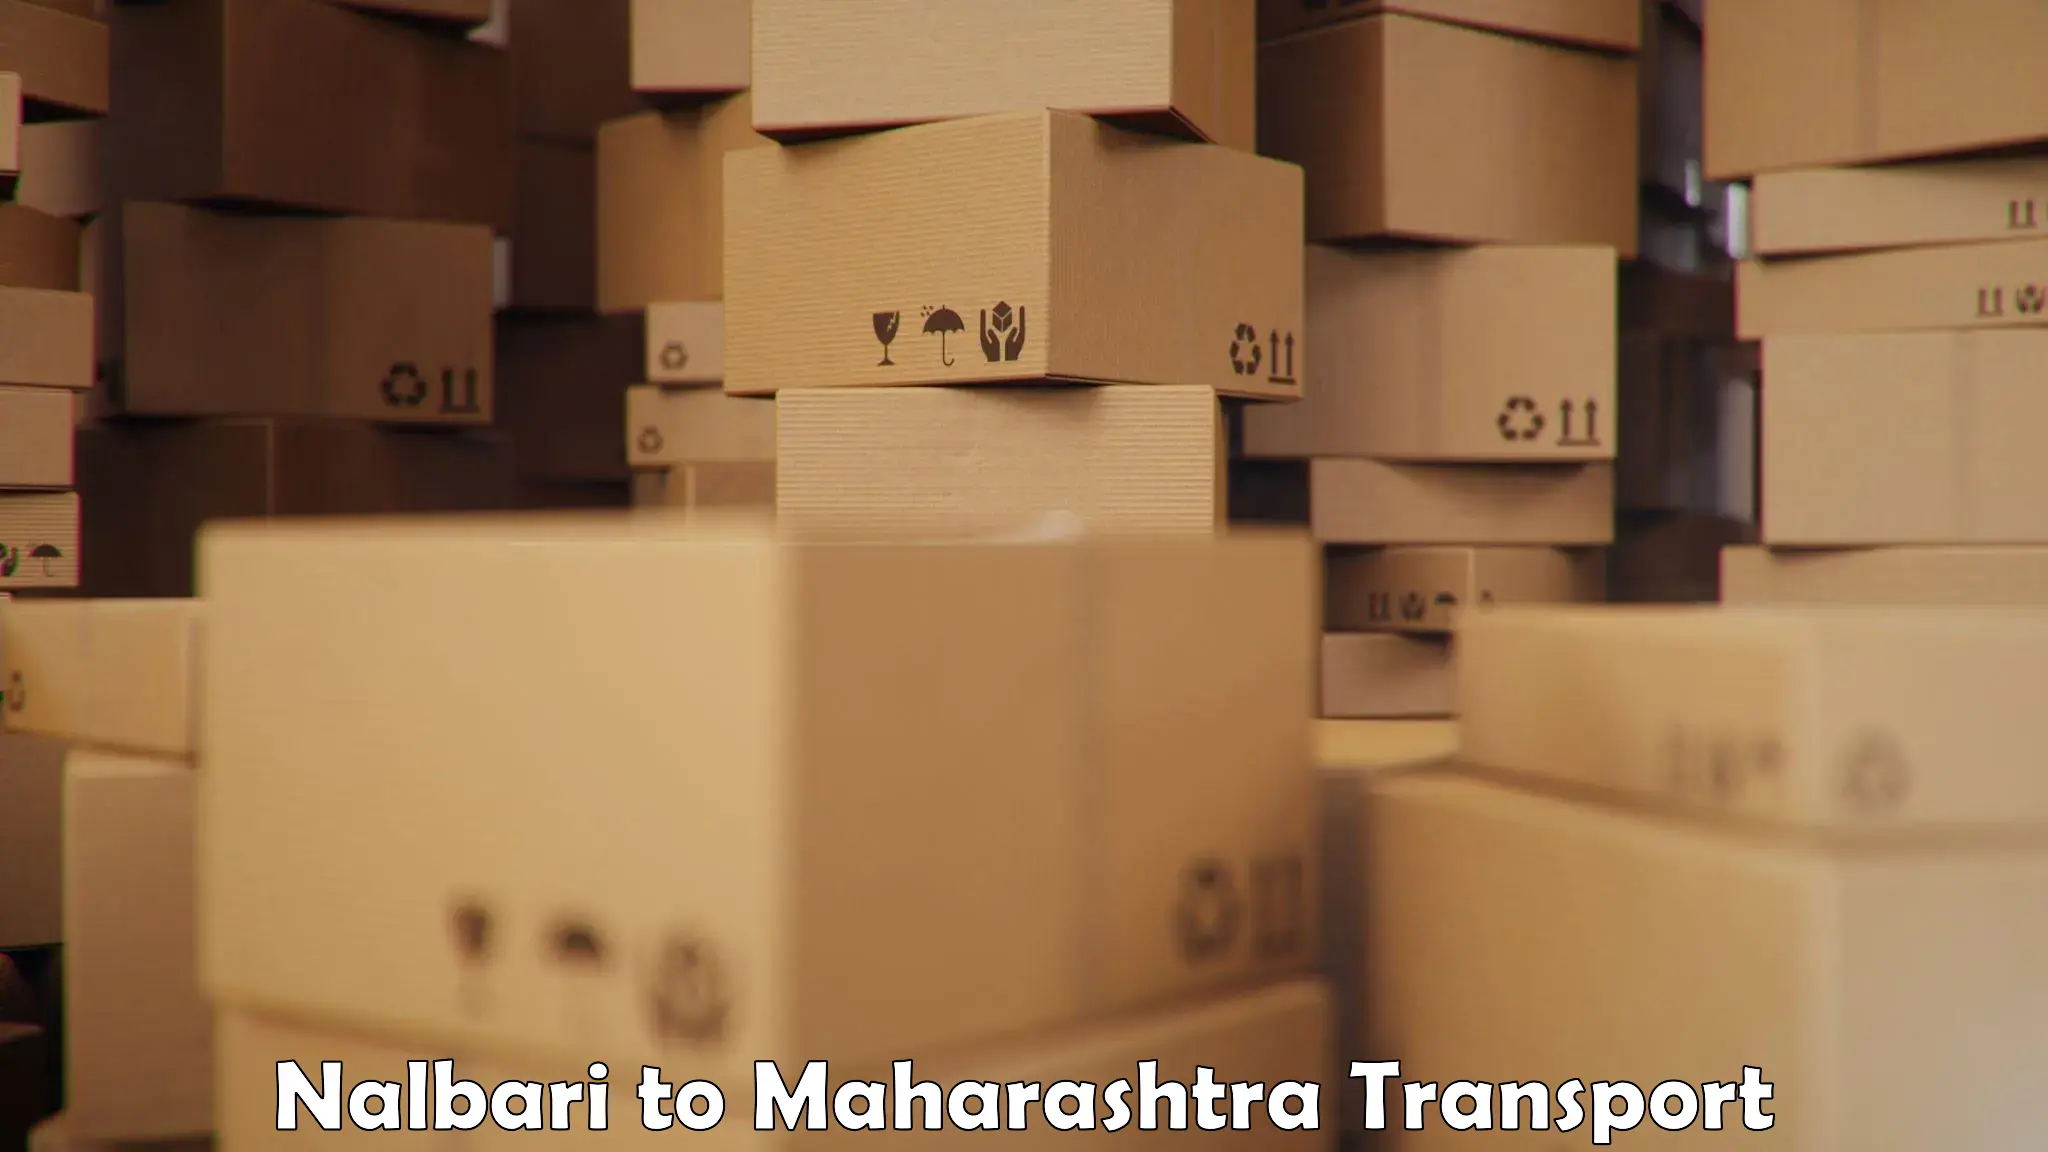 Truck transport companies in India Nalbari to Ojhar